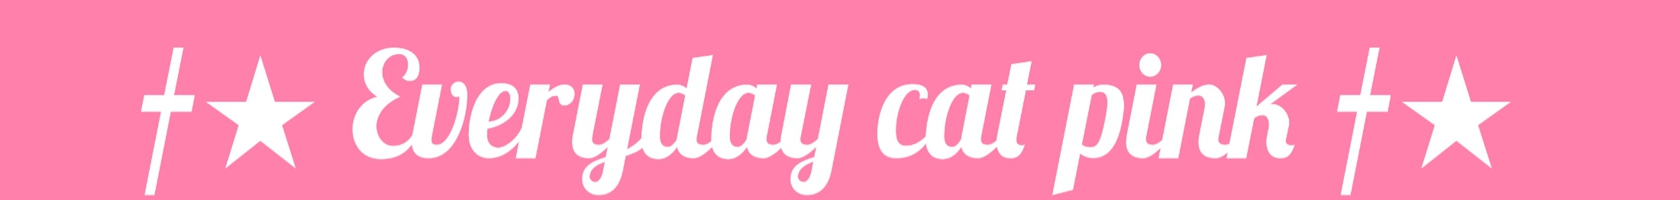  †★ Everyday cat pink †★